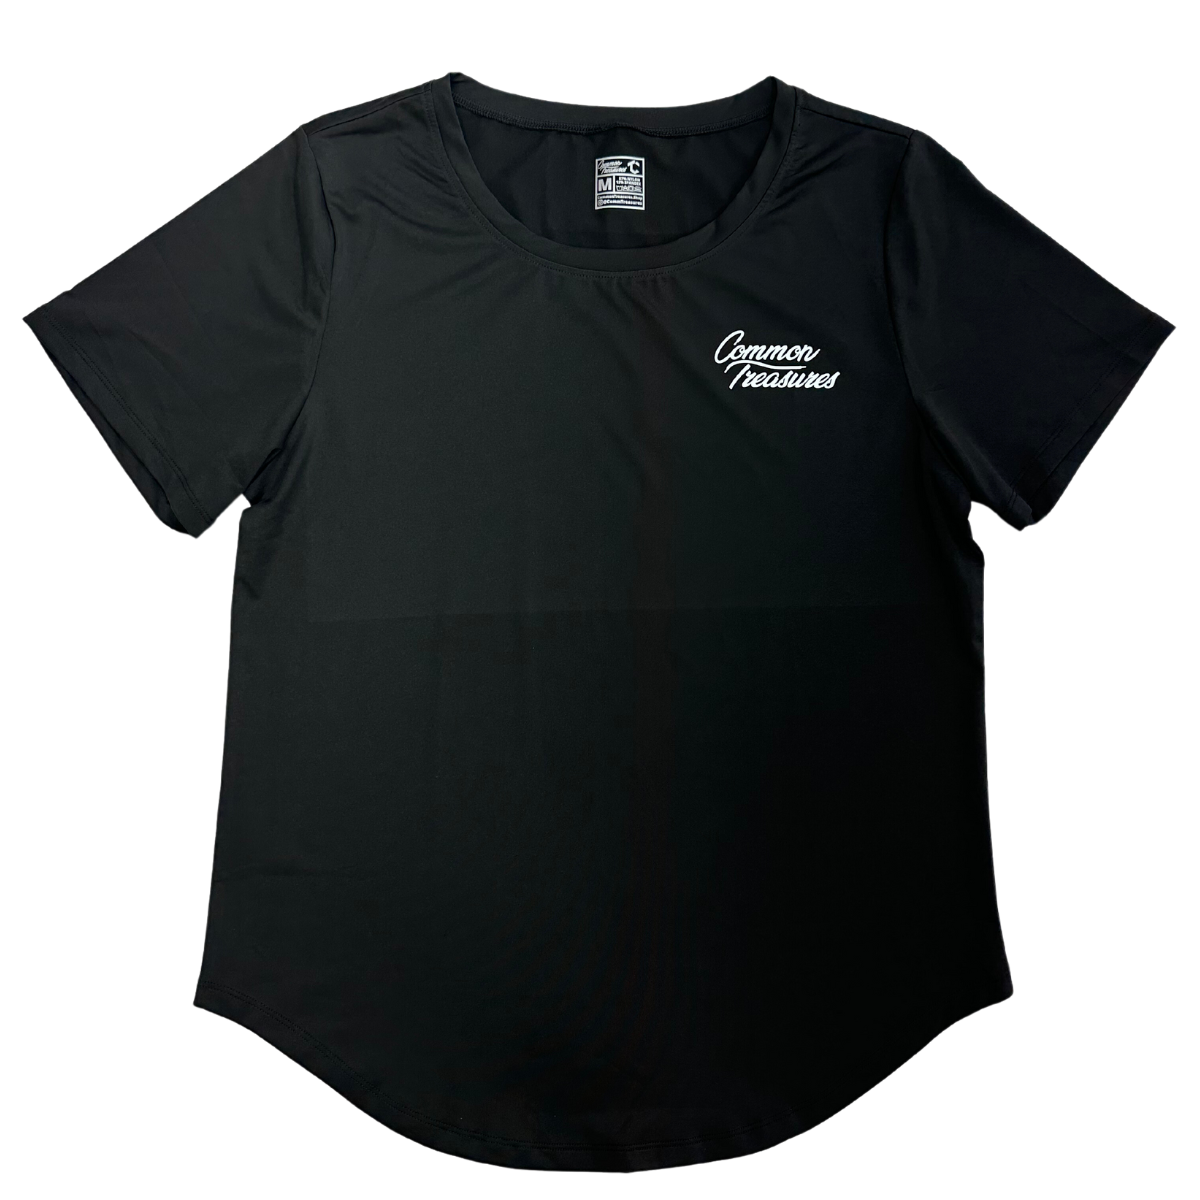 Women's Athletic Short Sleeve T-Shirt